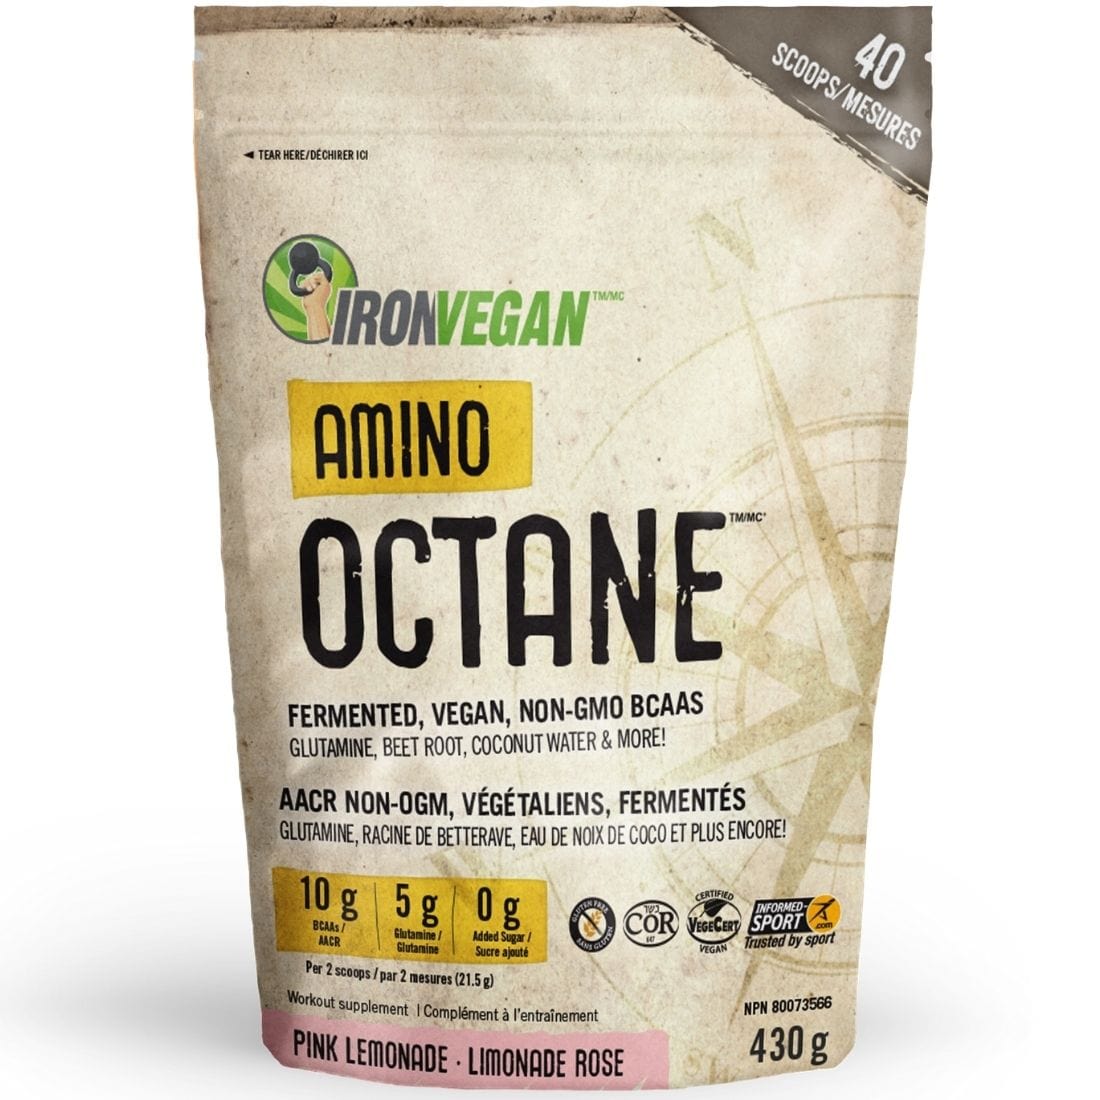 Iron Vegan Amino Octane (Vegan BCAA Formula), 40 Servings